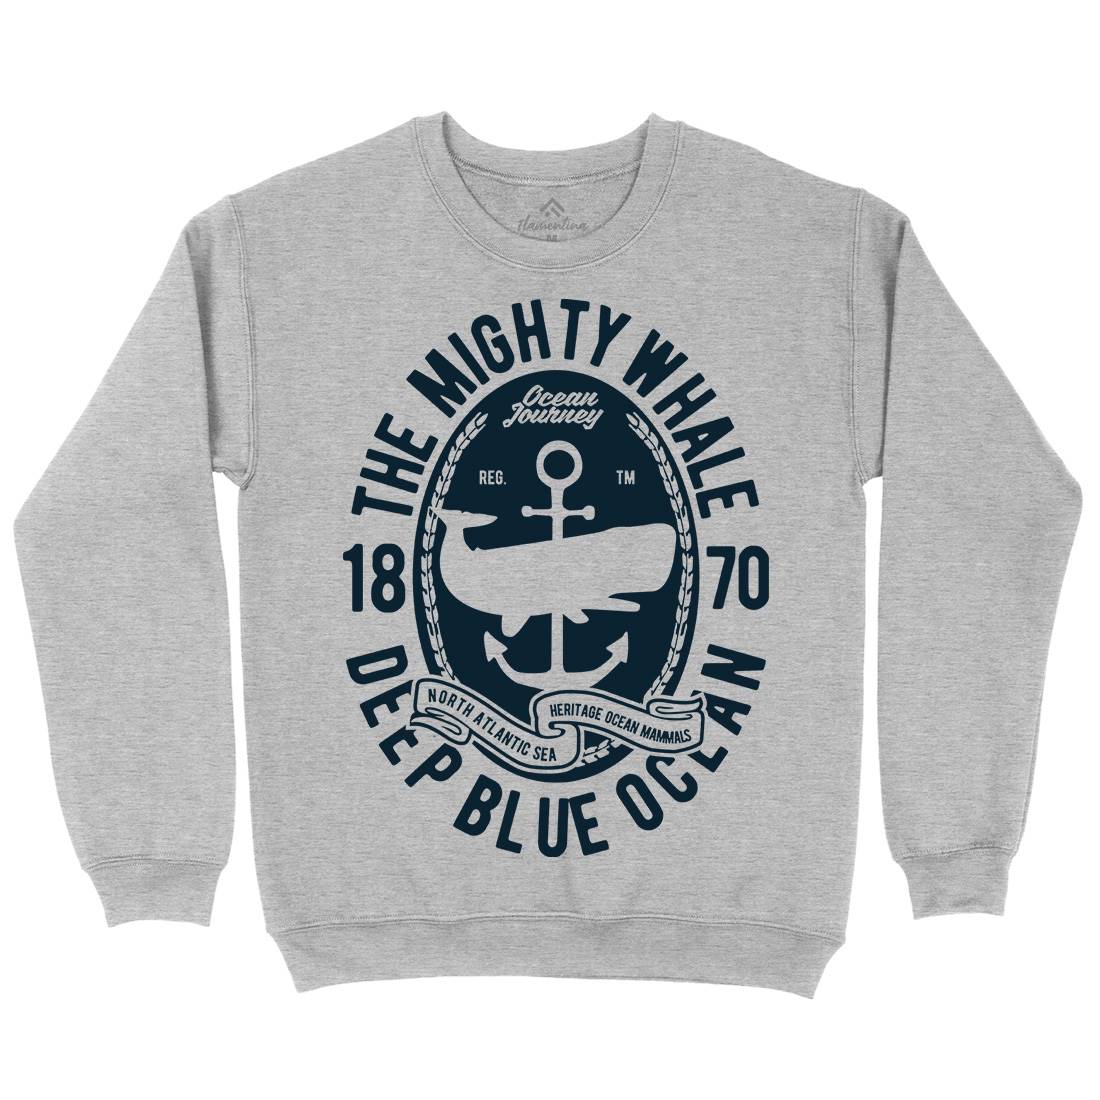 The Mighty Whale Mens Crew Neck Sweatshirt Navy B466